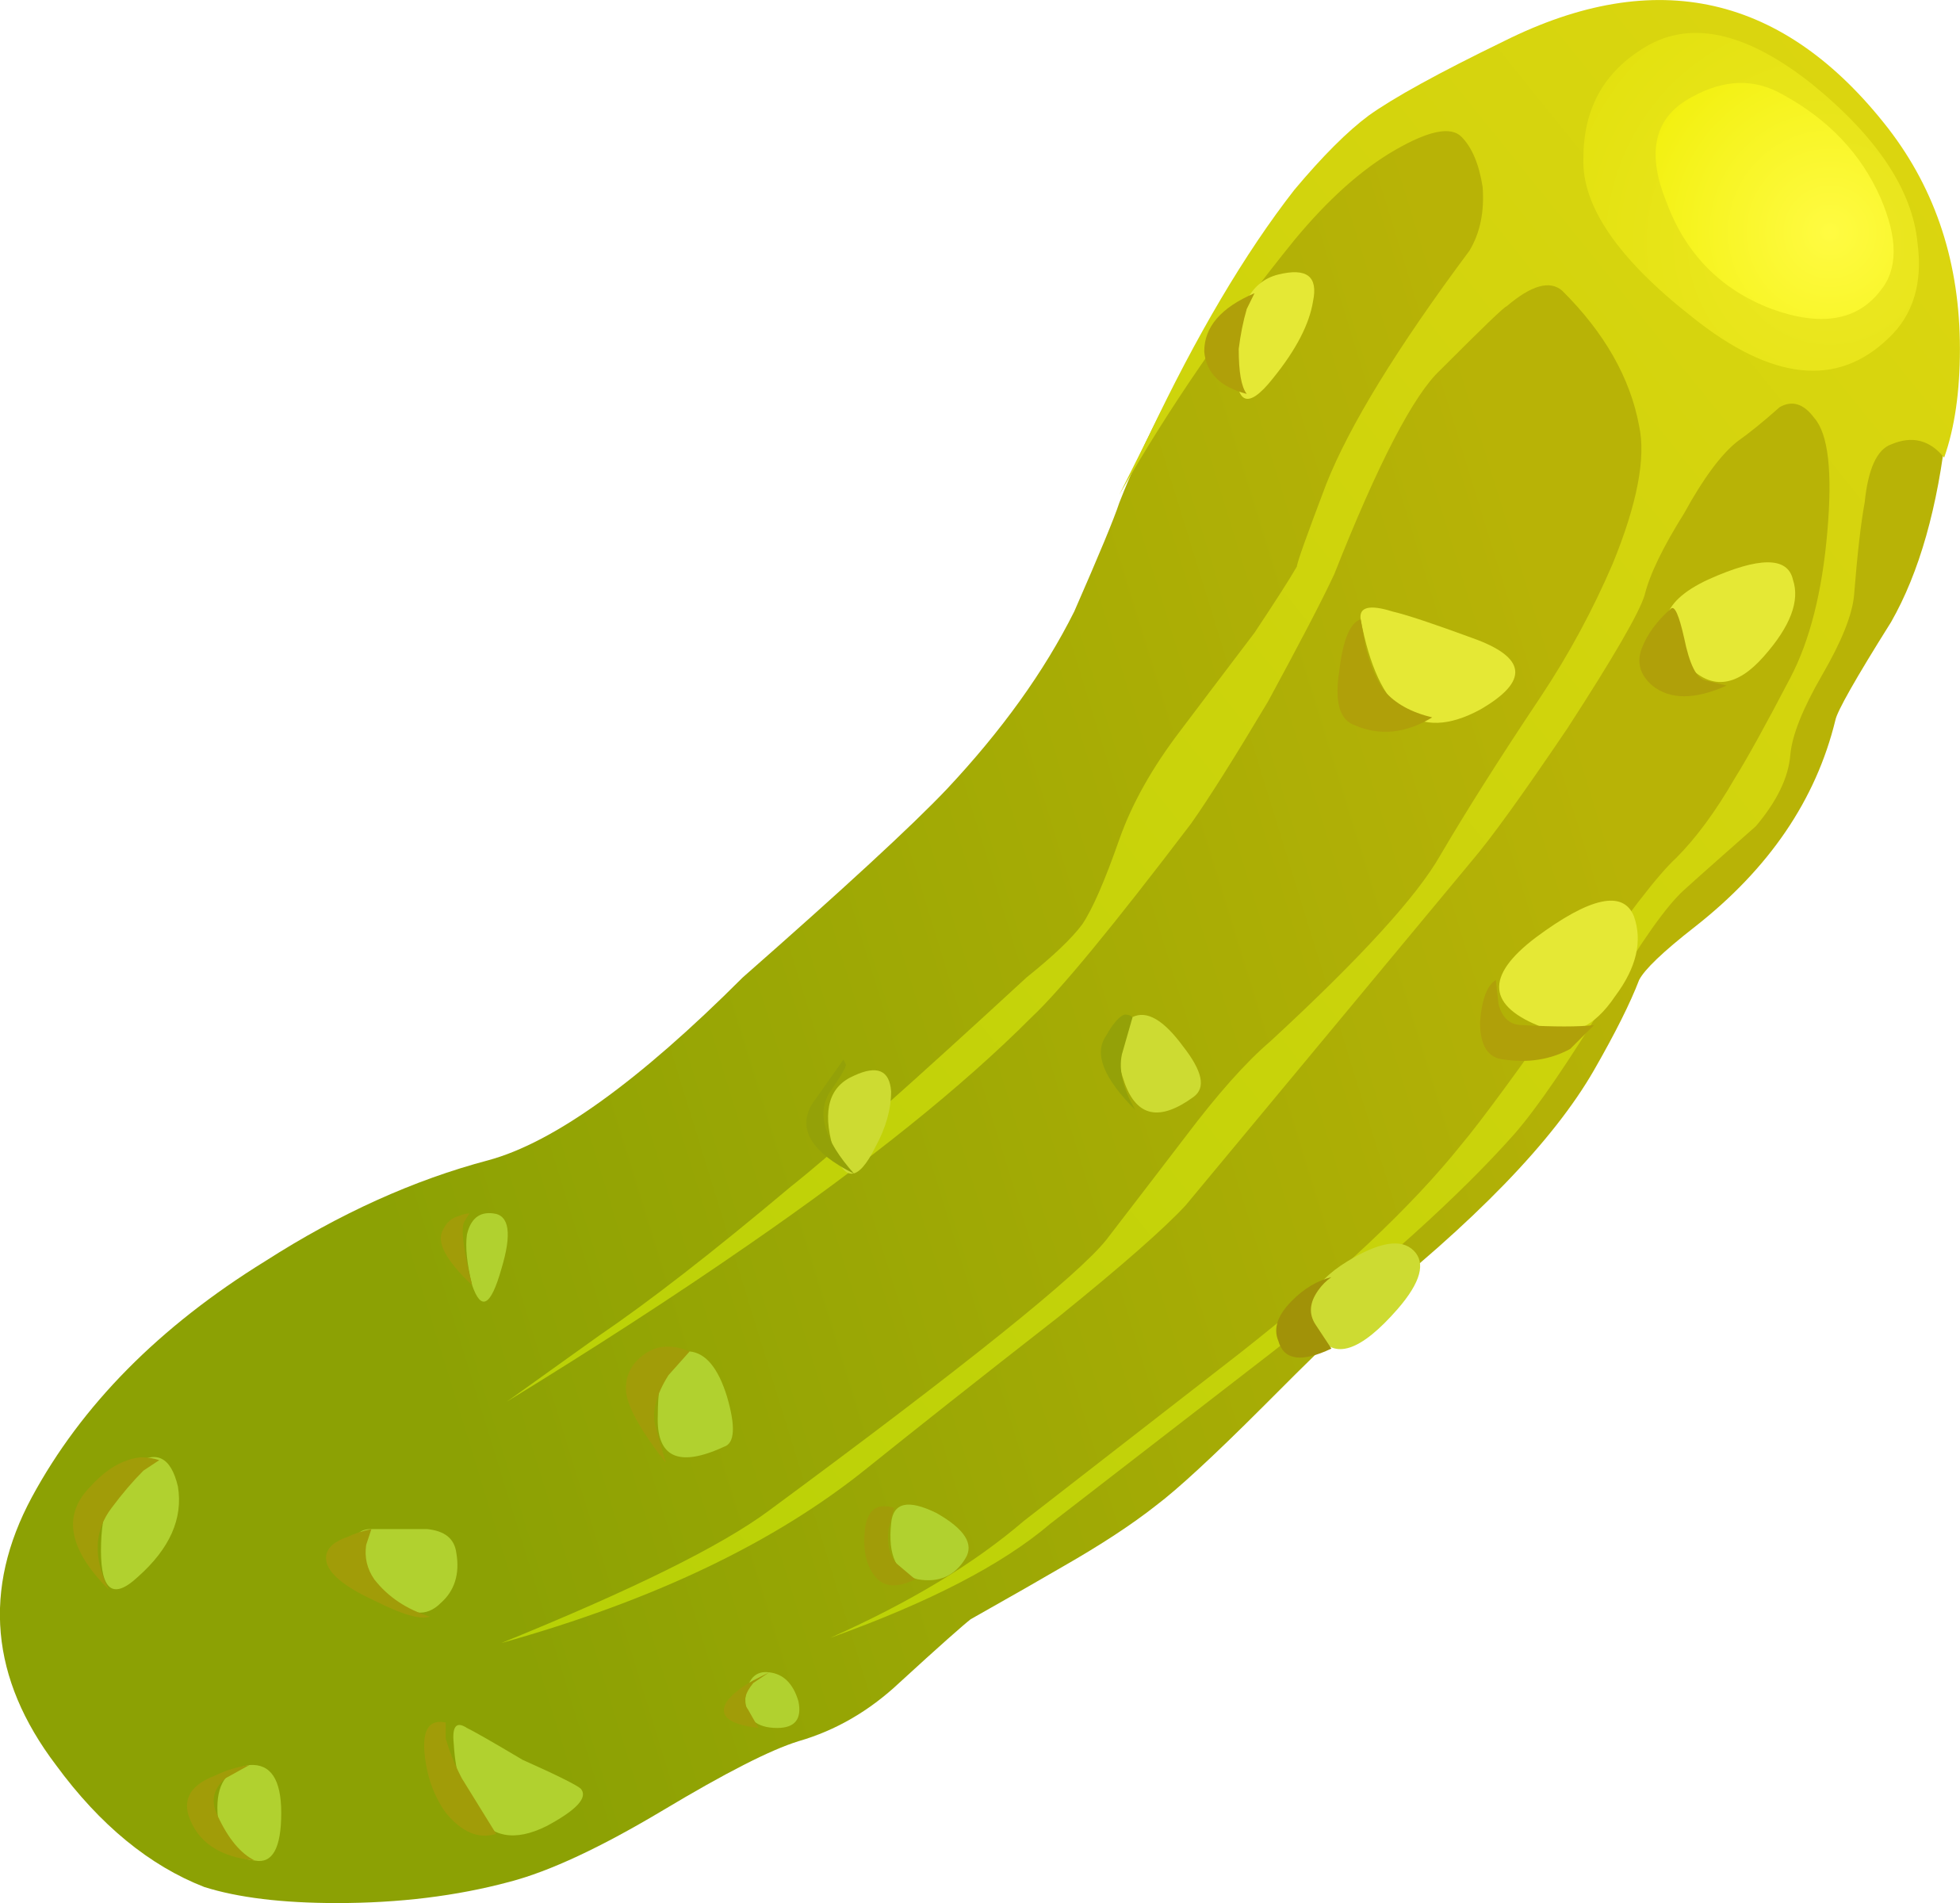 Free pickles cliparts download. Zucchini clipart small